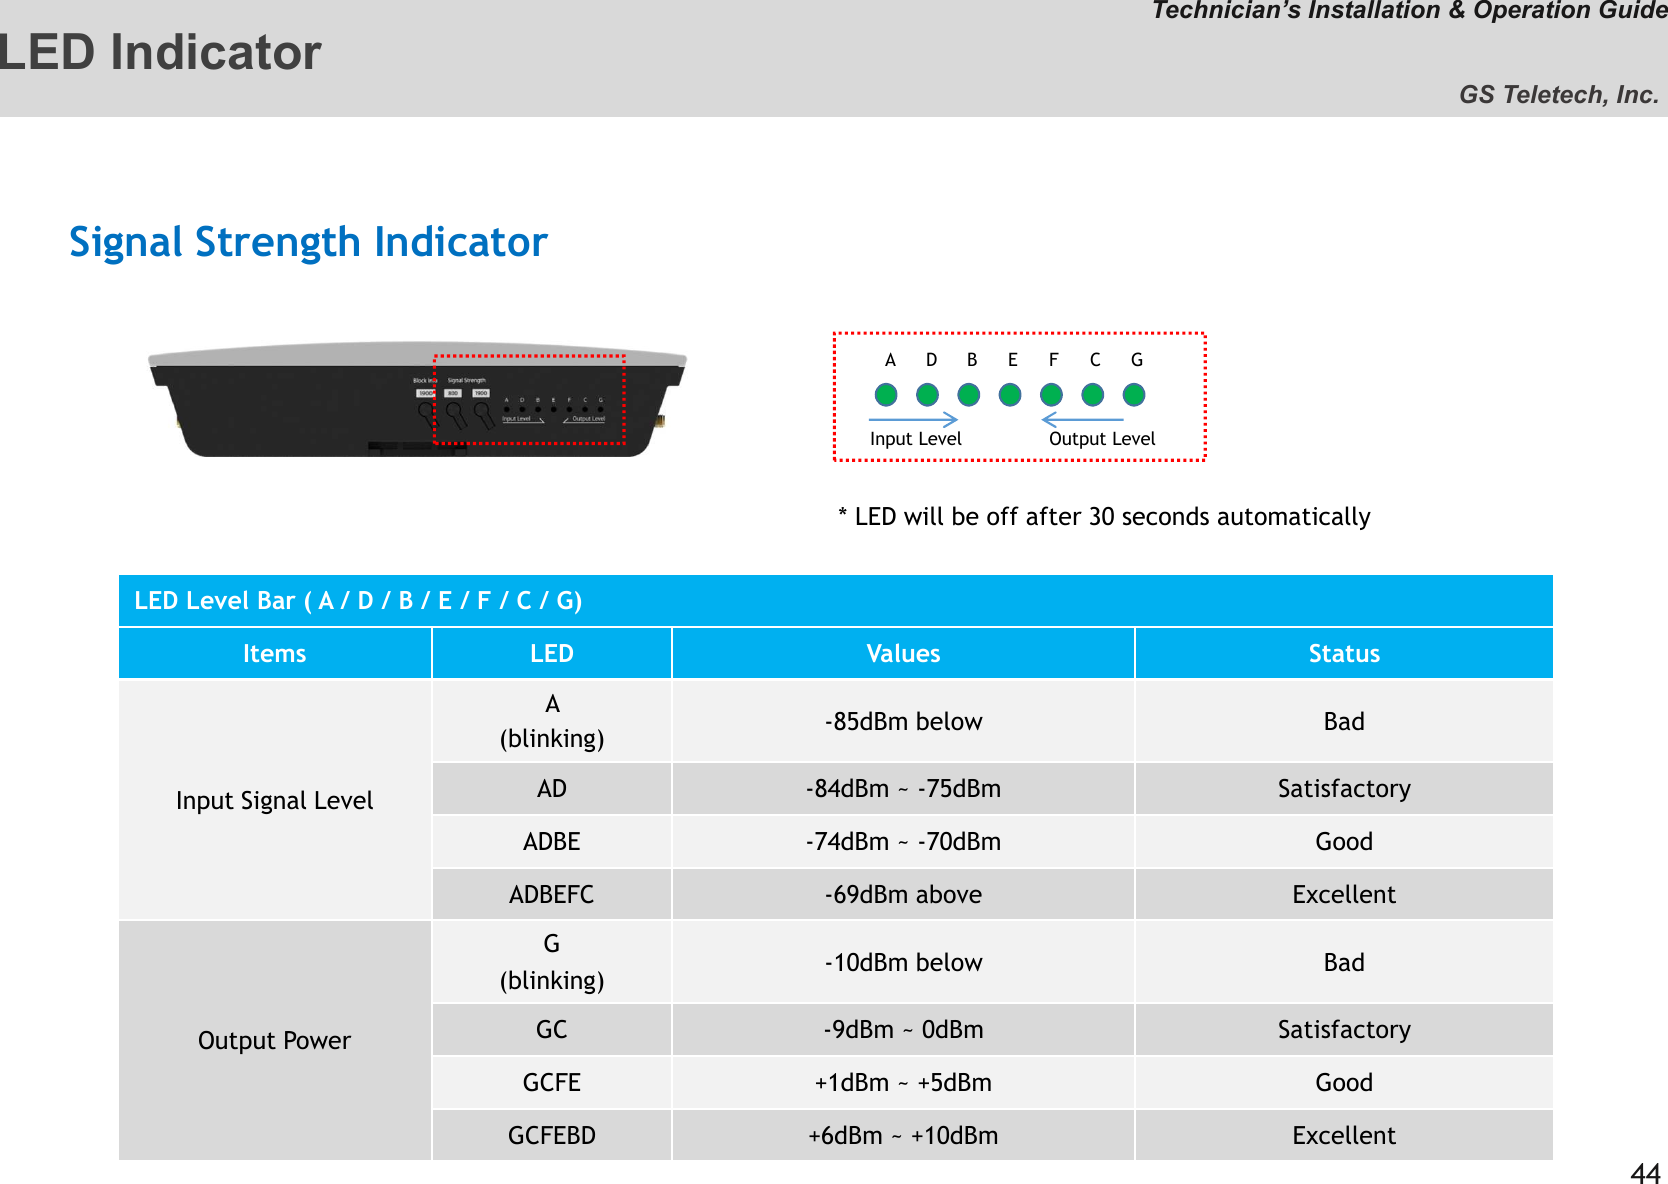  / 7 F &amp; &apos; $ 5$LED Indicator--Technician’s Installation &amp; Operation GuideSignal Strength IndicatorGS Teletech, Inc. LED Level Bar ( A / D / B / E / F / C / G)Items LED Values Status&quot;$021 D67*+ 7&quot;/ D6-7*SD47* &quot; &quot;G/7F D4-7*SD47* /7F&amp;&apos; D.=7*&quot; FI5+021 D7*+ 7&quot;&apos; D=7*S7* &quot; &quot;G&apos;&amp;F :7*S:7* &apos;&amp;F7/ :.7*S:7* FIR$F/+  &quot; ,&quot;*&quot;&quot;G